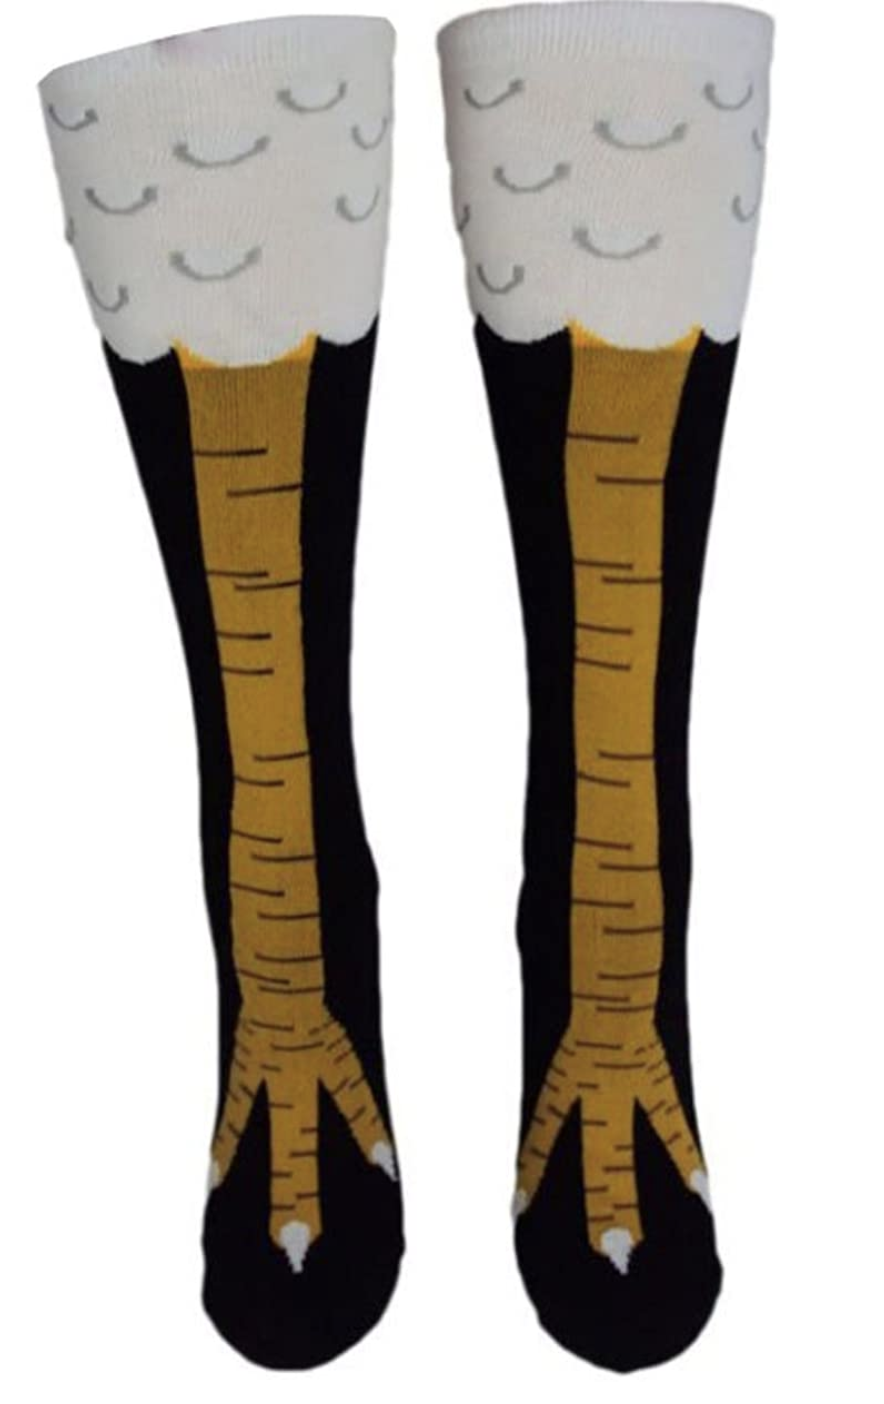 3 Pairs Crazy Funny Chicken Legs Socks Chicken Knee Thigh High Socks Chicken Leg Feet Socks for Thanksgiving Costume